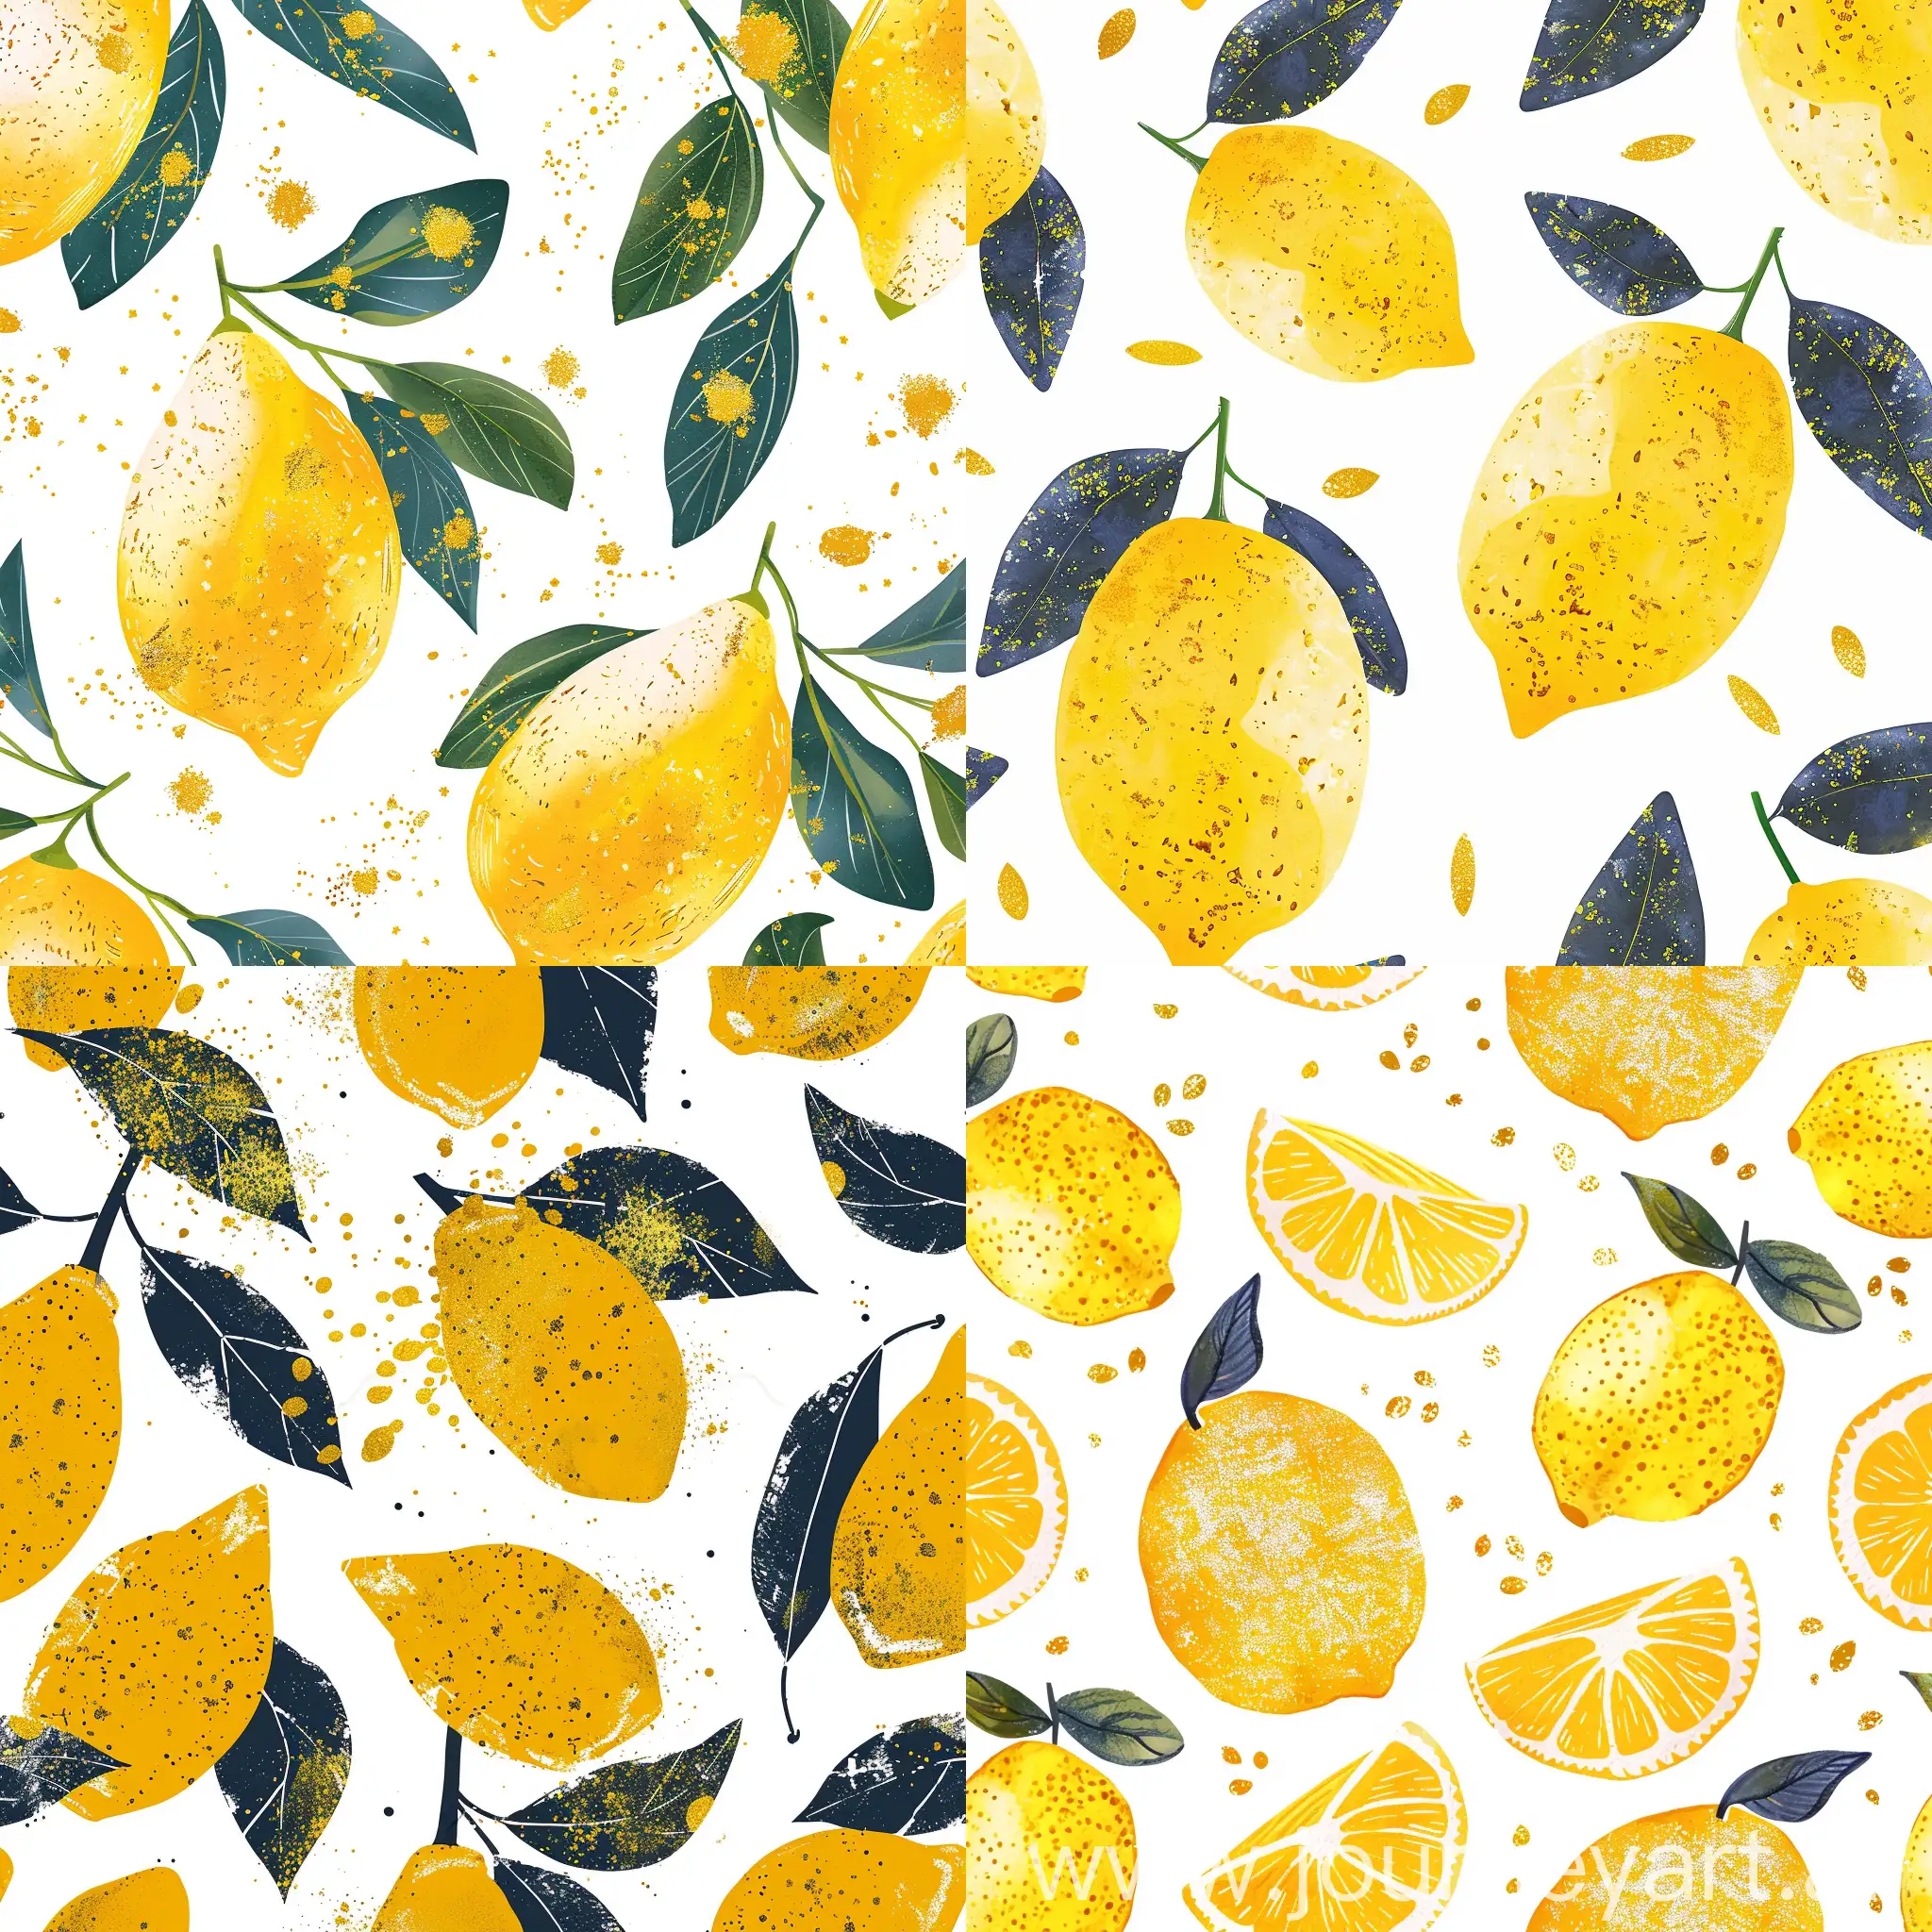 Vibrant-Yellow-Lemon-Seamless-Pattern-with-Gold-Glitter-Digital-Illustration